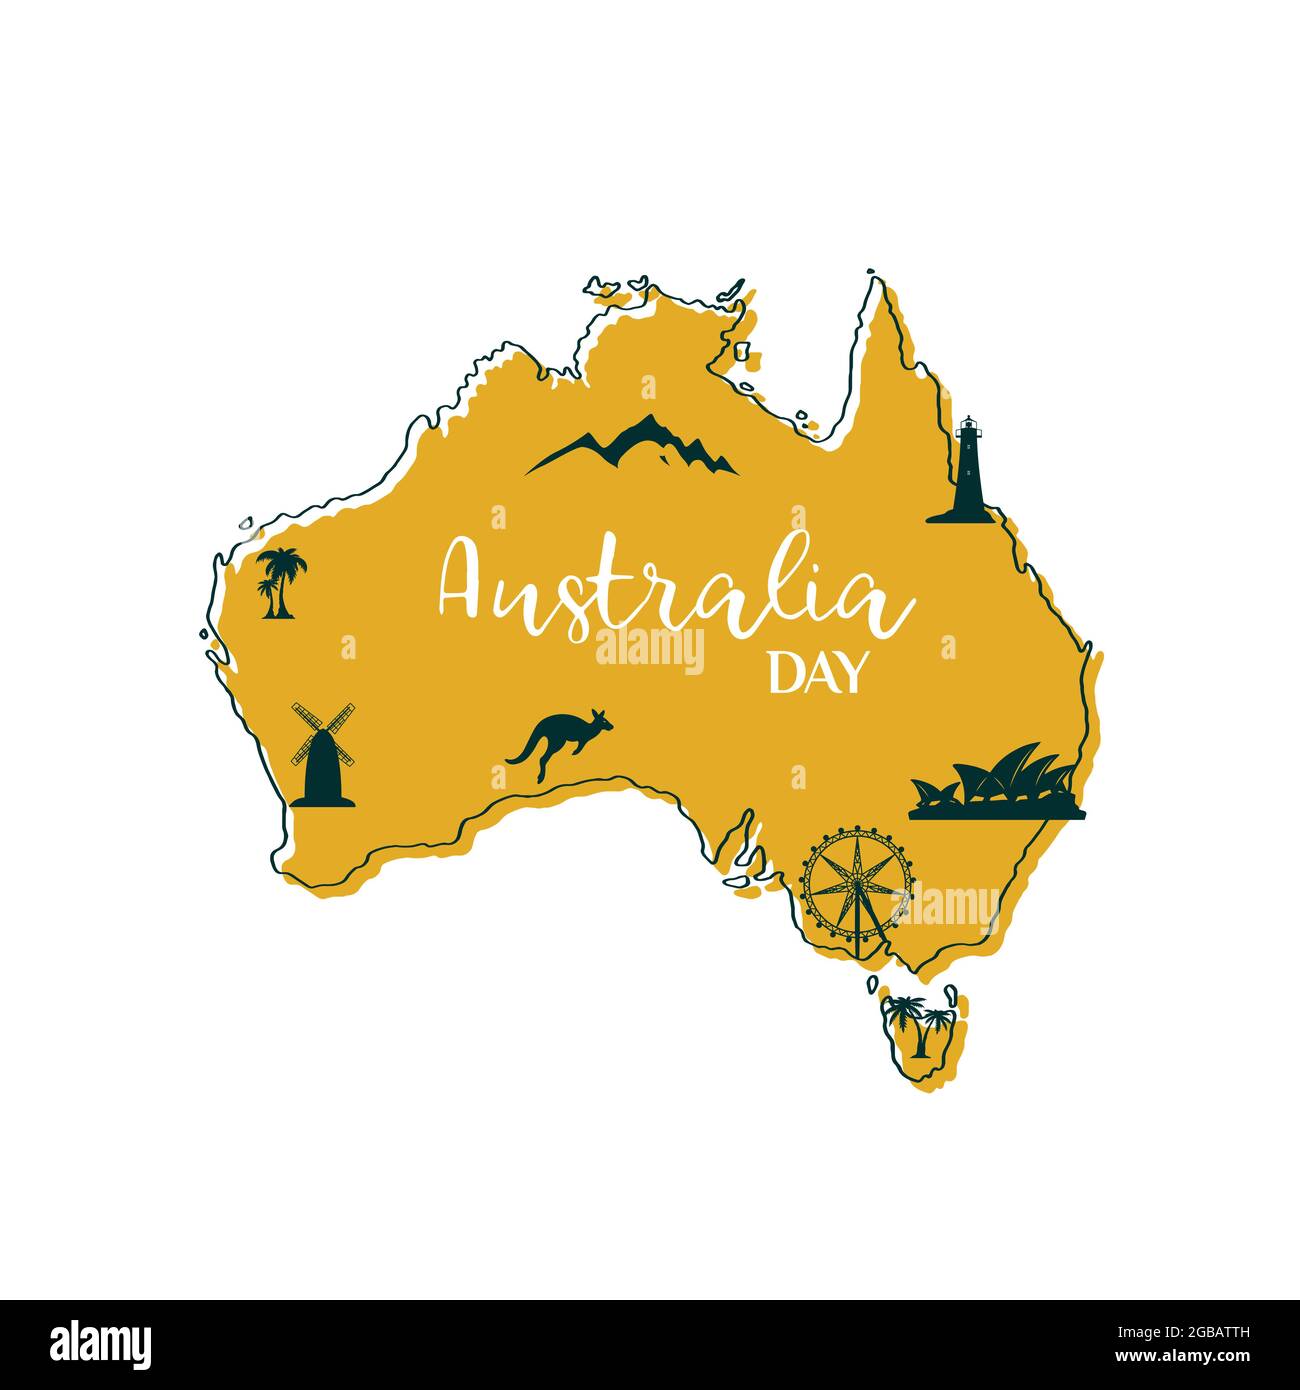 Stylized map of Australia with main Australian symbols Kanguroo, Sydney Opera House, Ferris wheel, Light house, palms and mountains. Vector illustrati Stock Vector